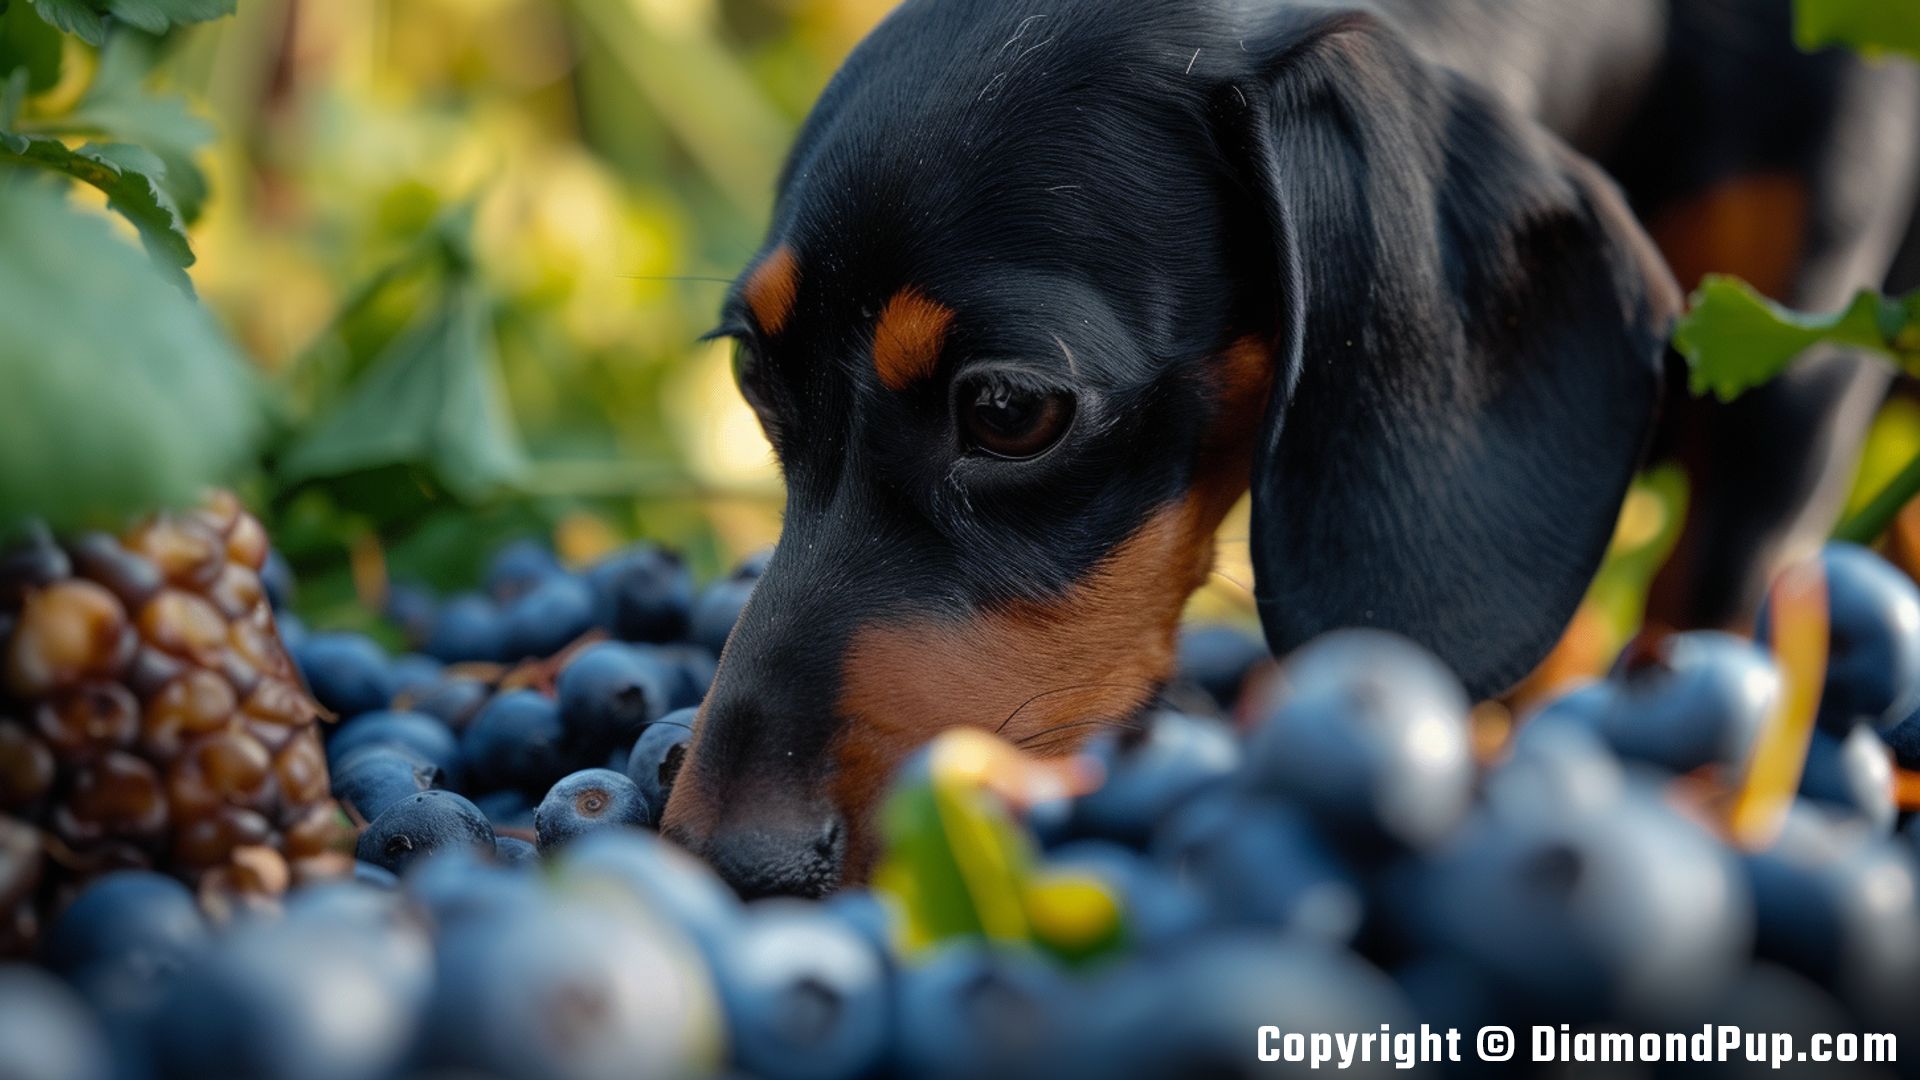 Photograph of a Cute Dachshund Eating Blueberries